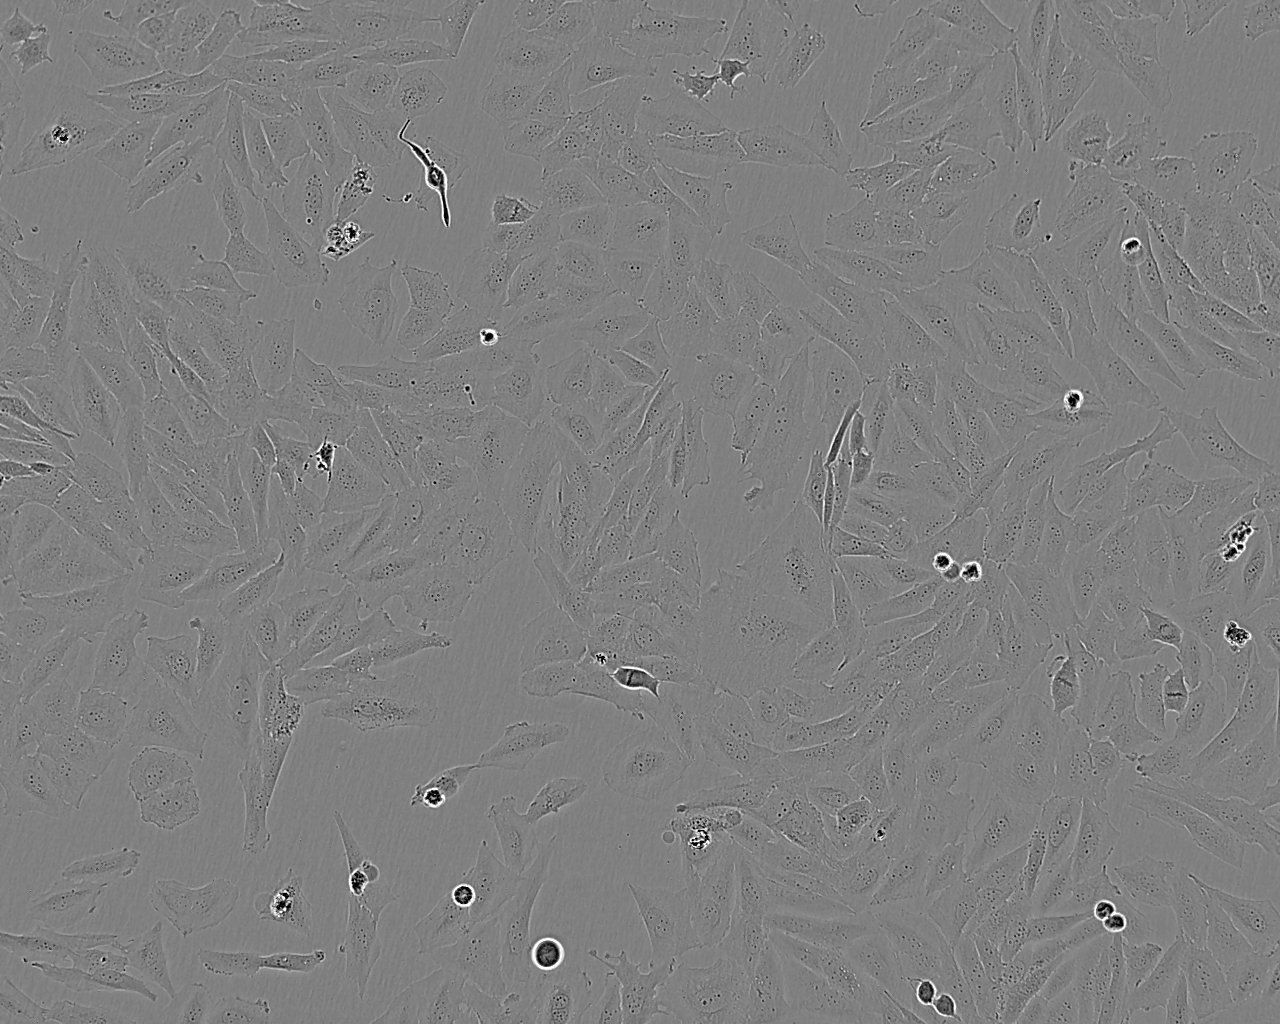 RPMI-2650 epithelioid cells人鼻腔上皮细胞系,RPMI-2650 epithelioid cells